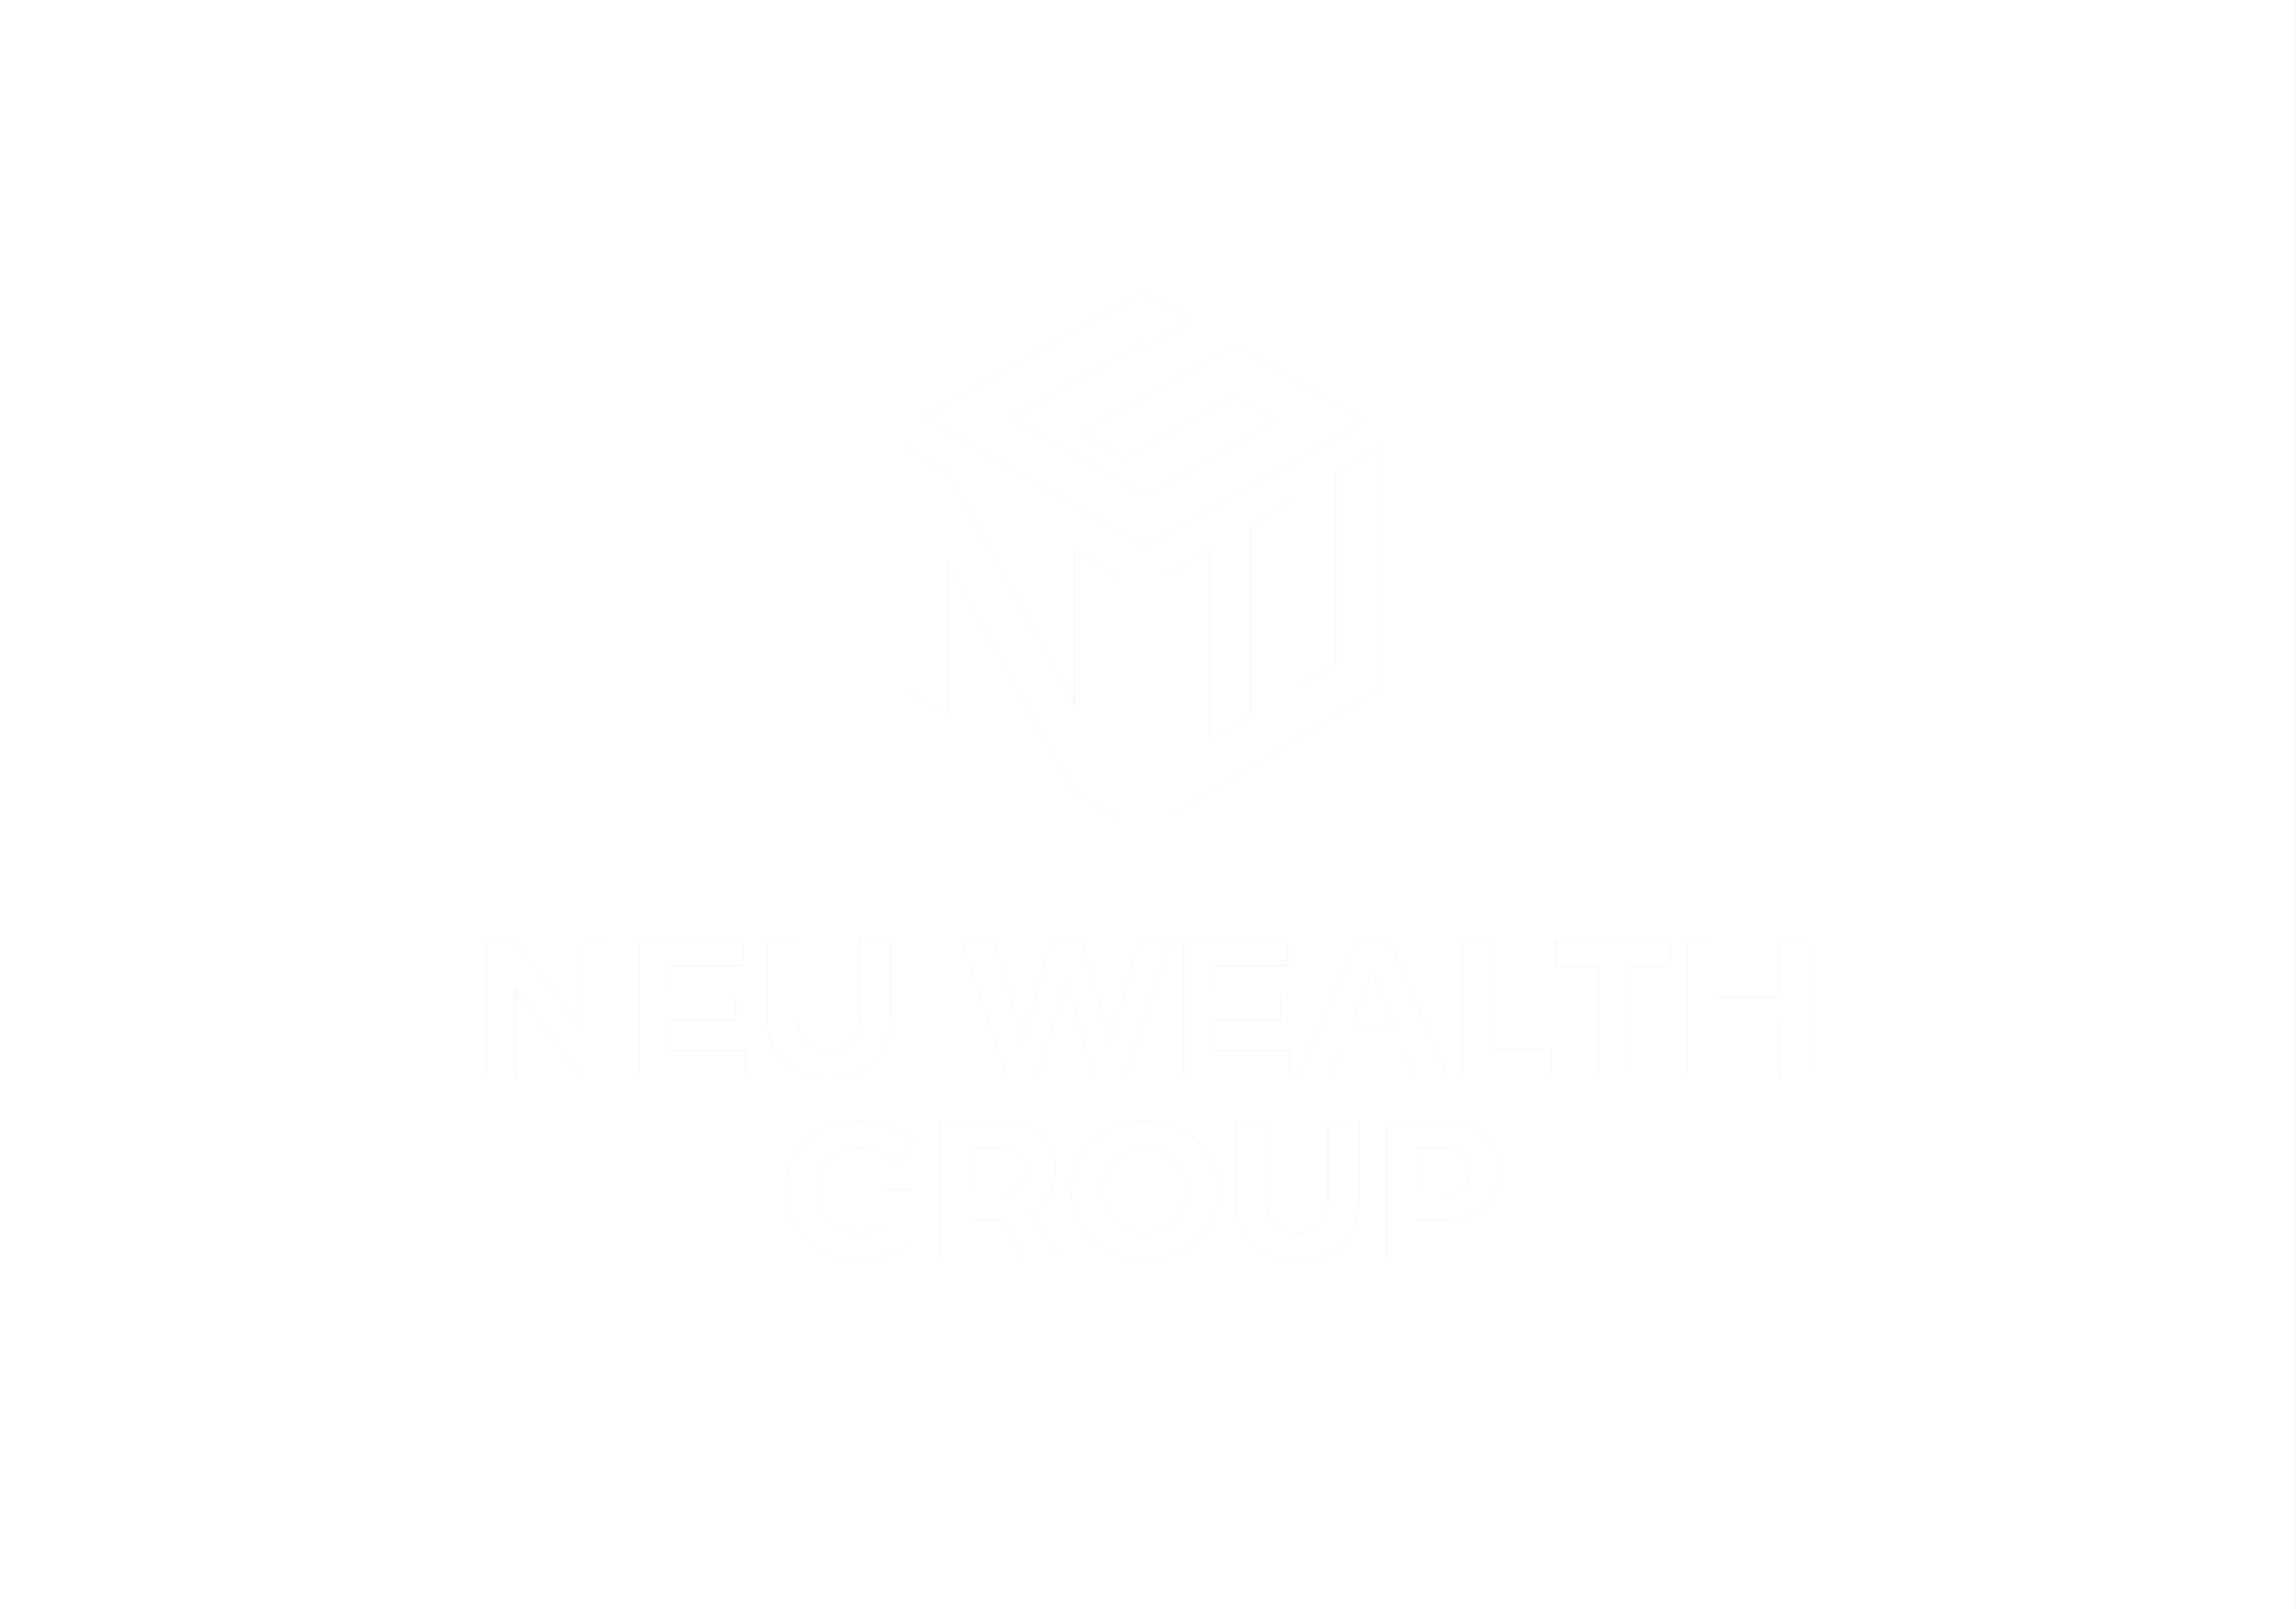 NEU Wealth Group